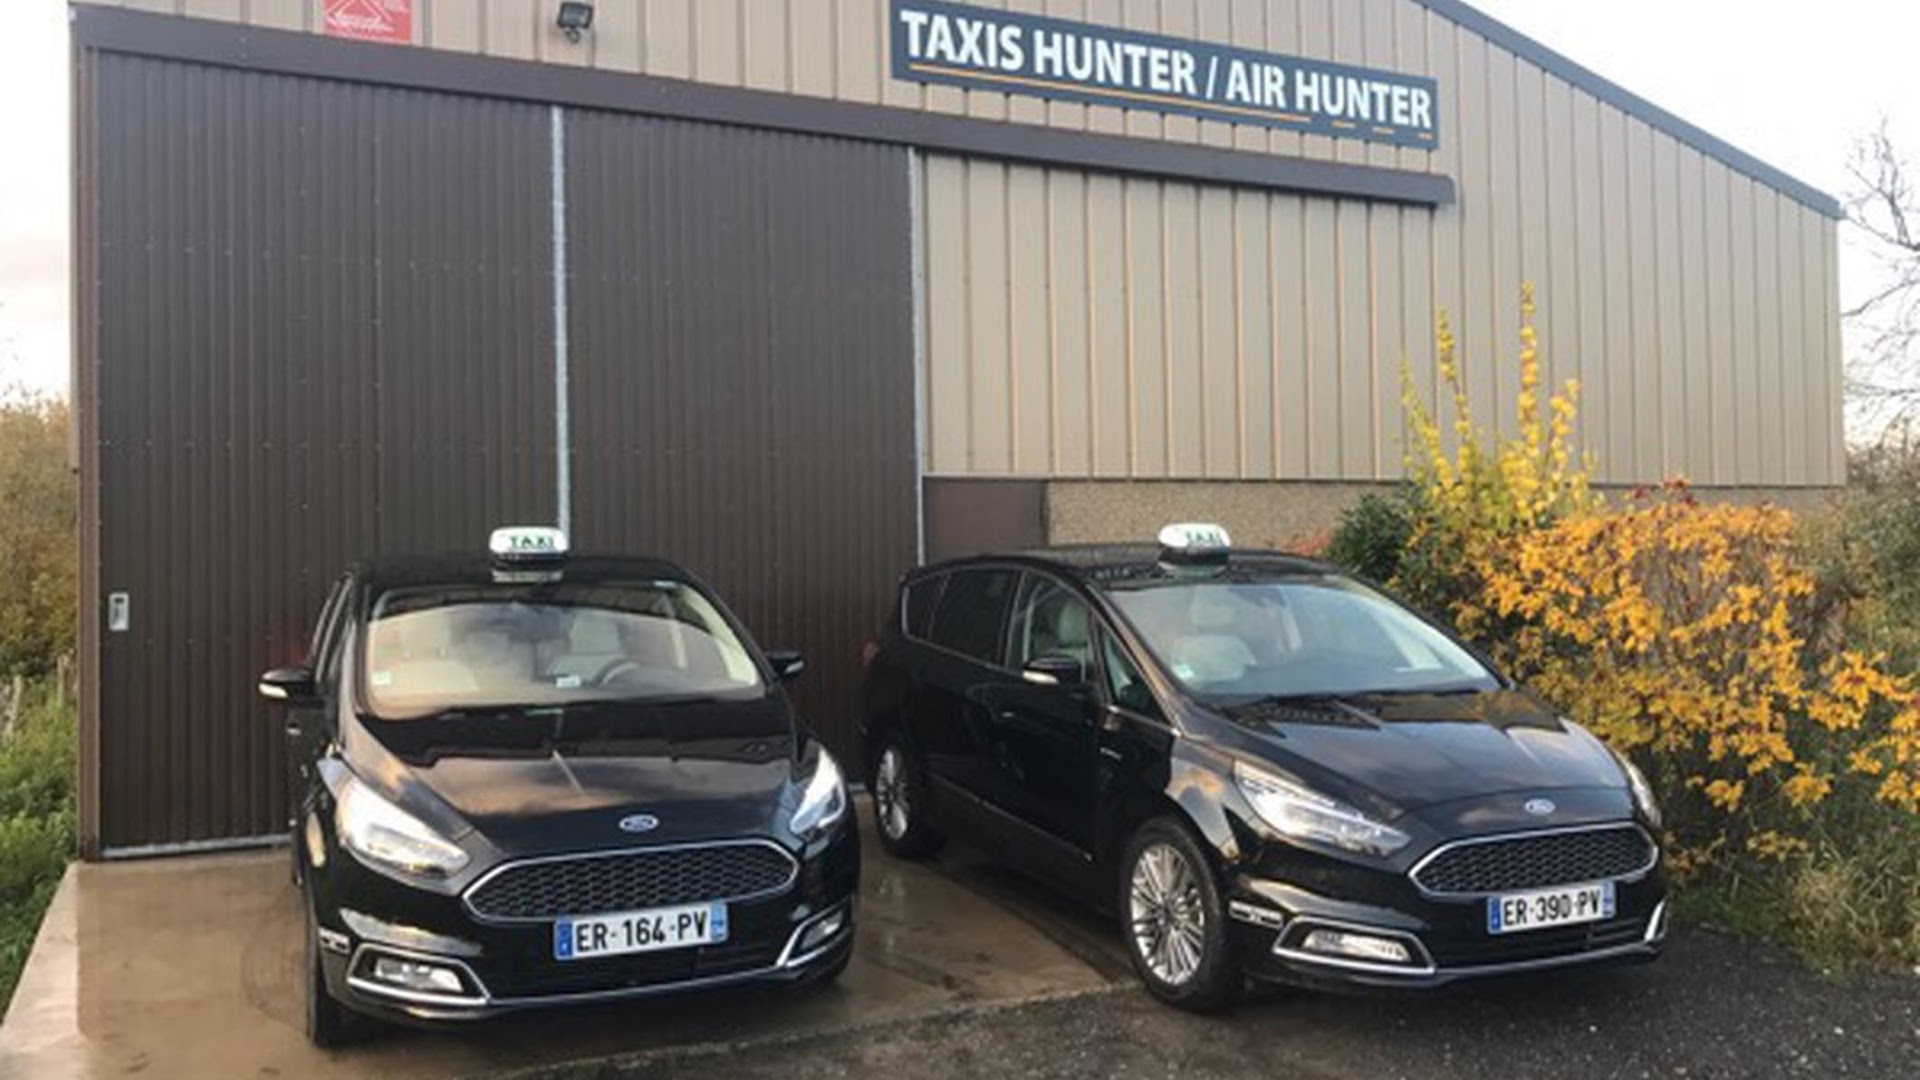 Taxis Hunter Et Air Hunter Service de navette aéroport